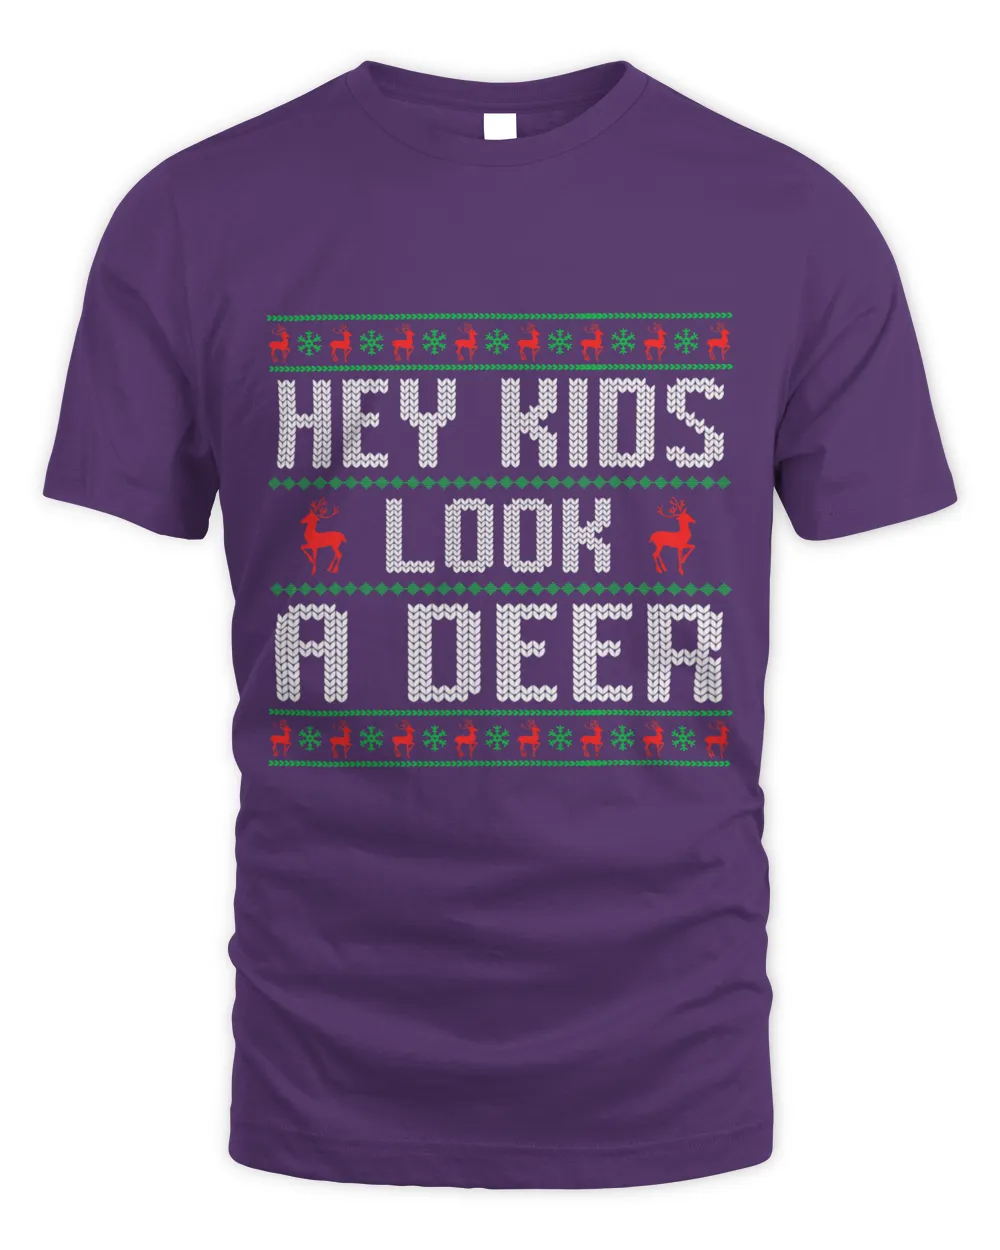 Christmas Saying Quote Hey Kids Look A Deer